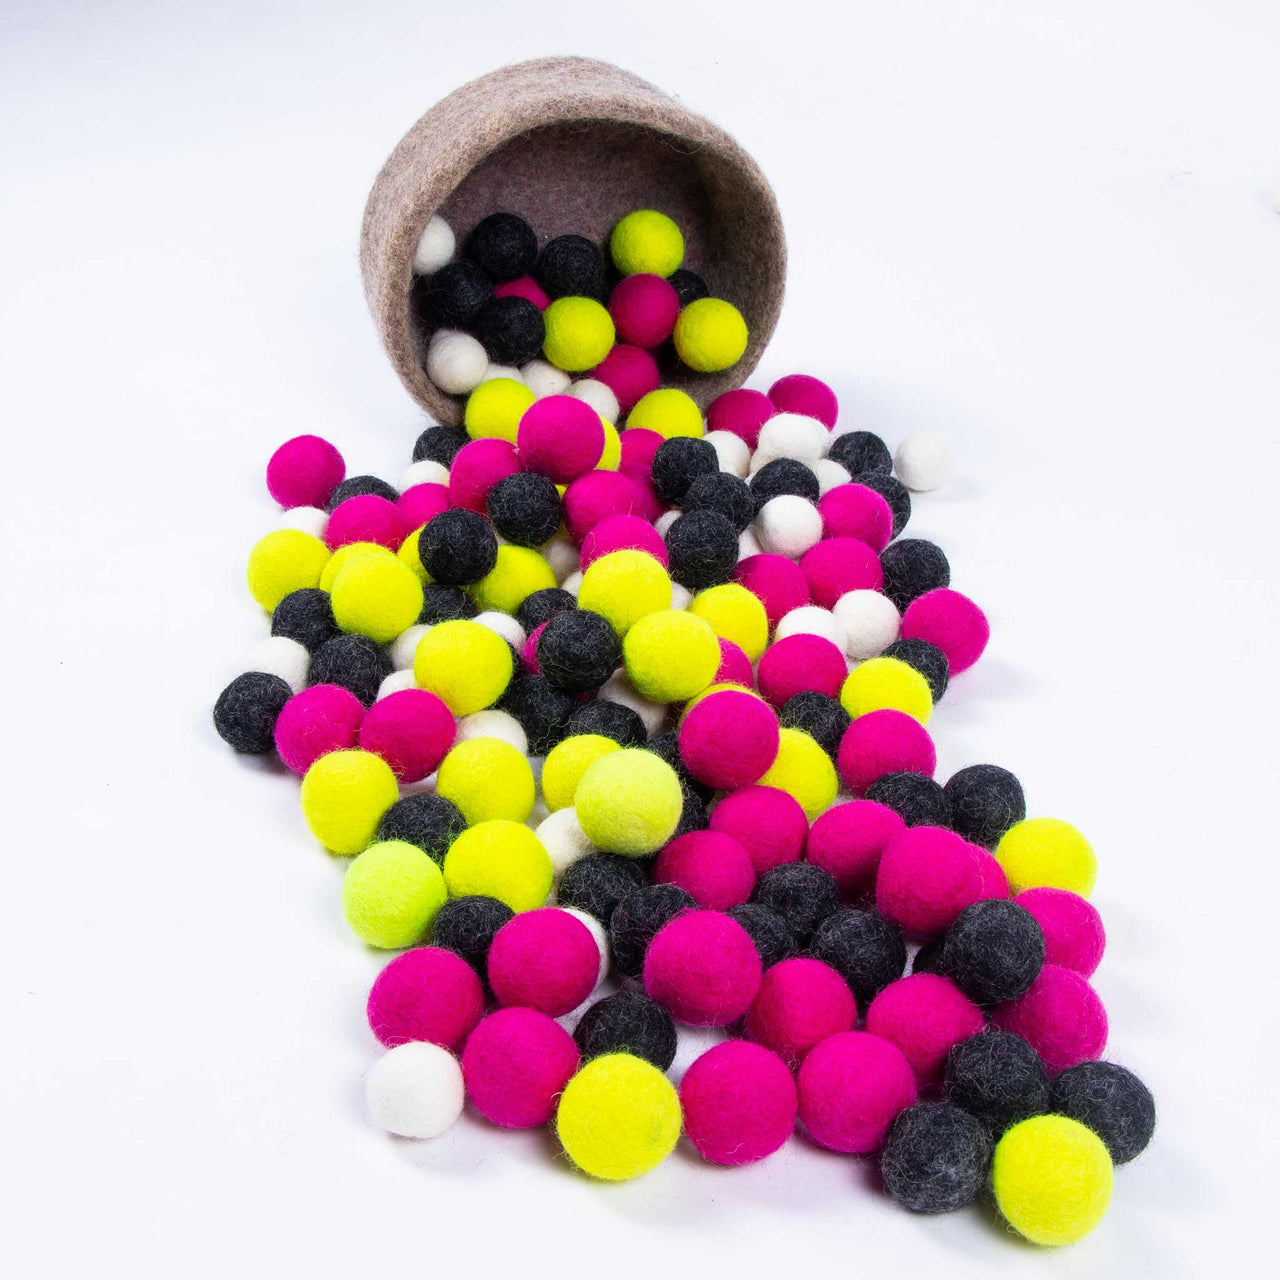 Handmade Felt Balls made from New Zealand Wool, Non-Toxic Bright Colors,  Eco-friendly Cat Toys